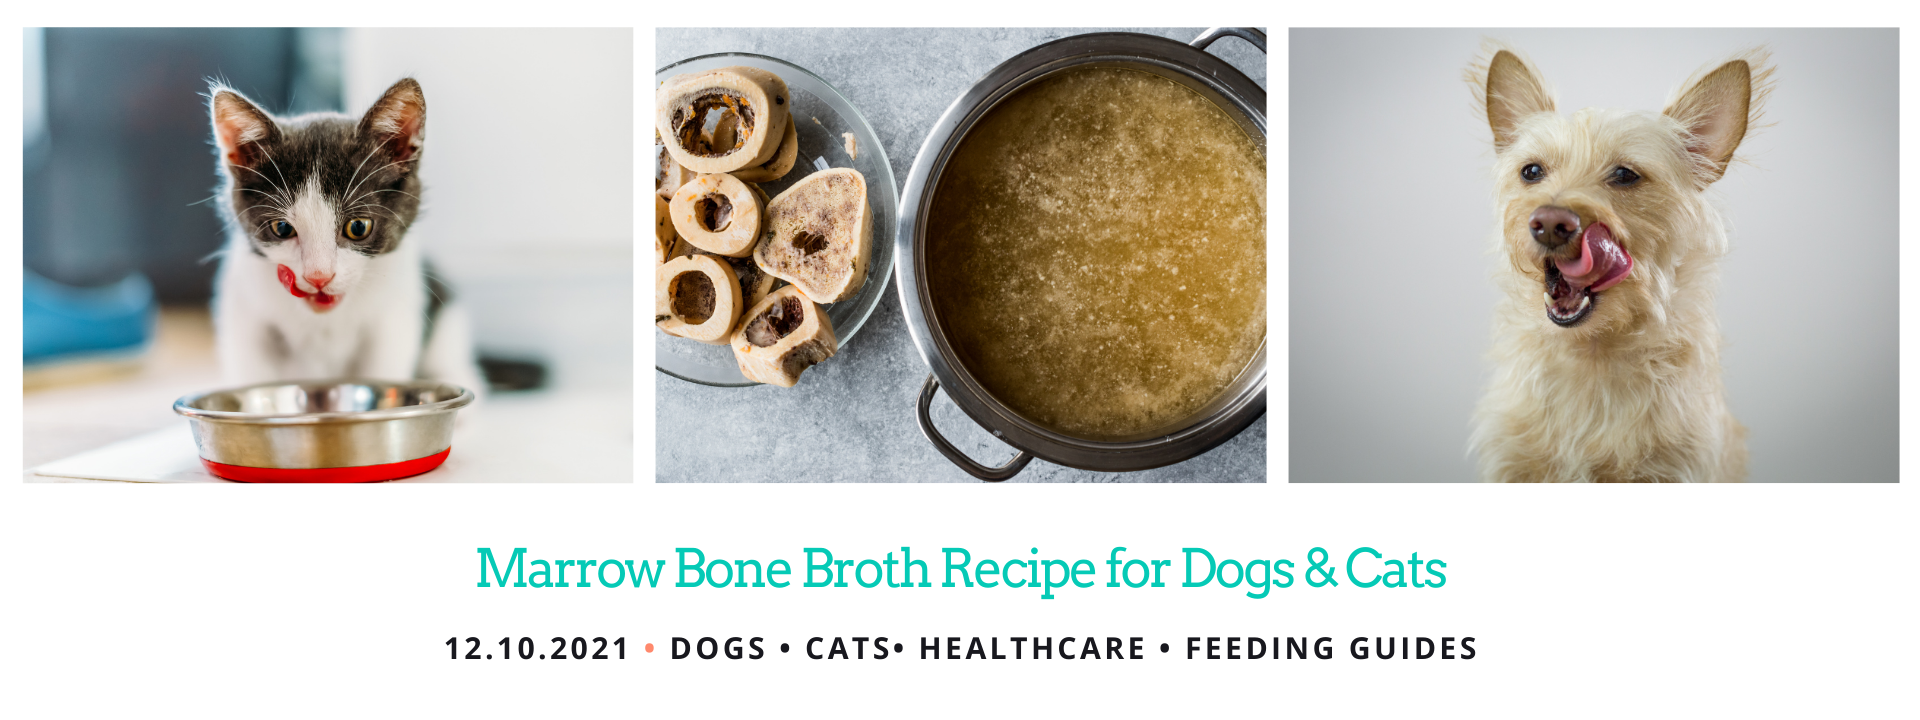 Marrow Bone Broth Recipe for Dogs & Cats